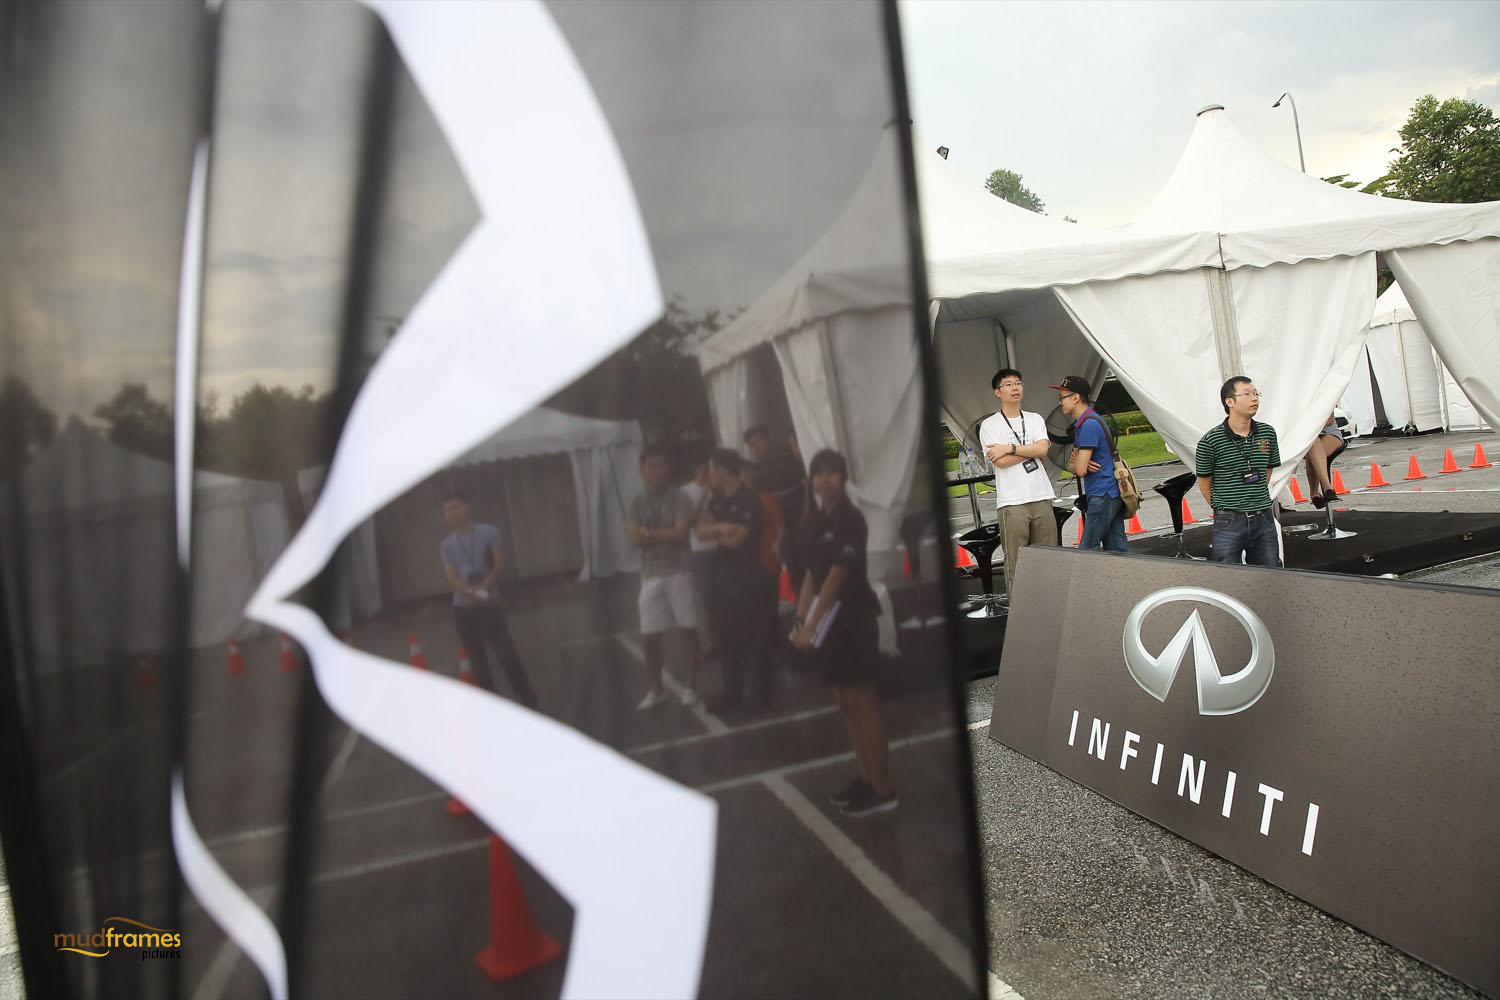 Infiniti Drive Malaysia in Desa Parkcity 2015